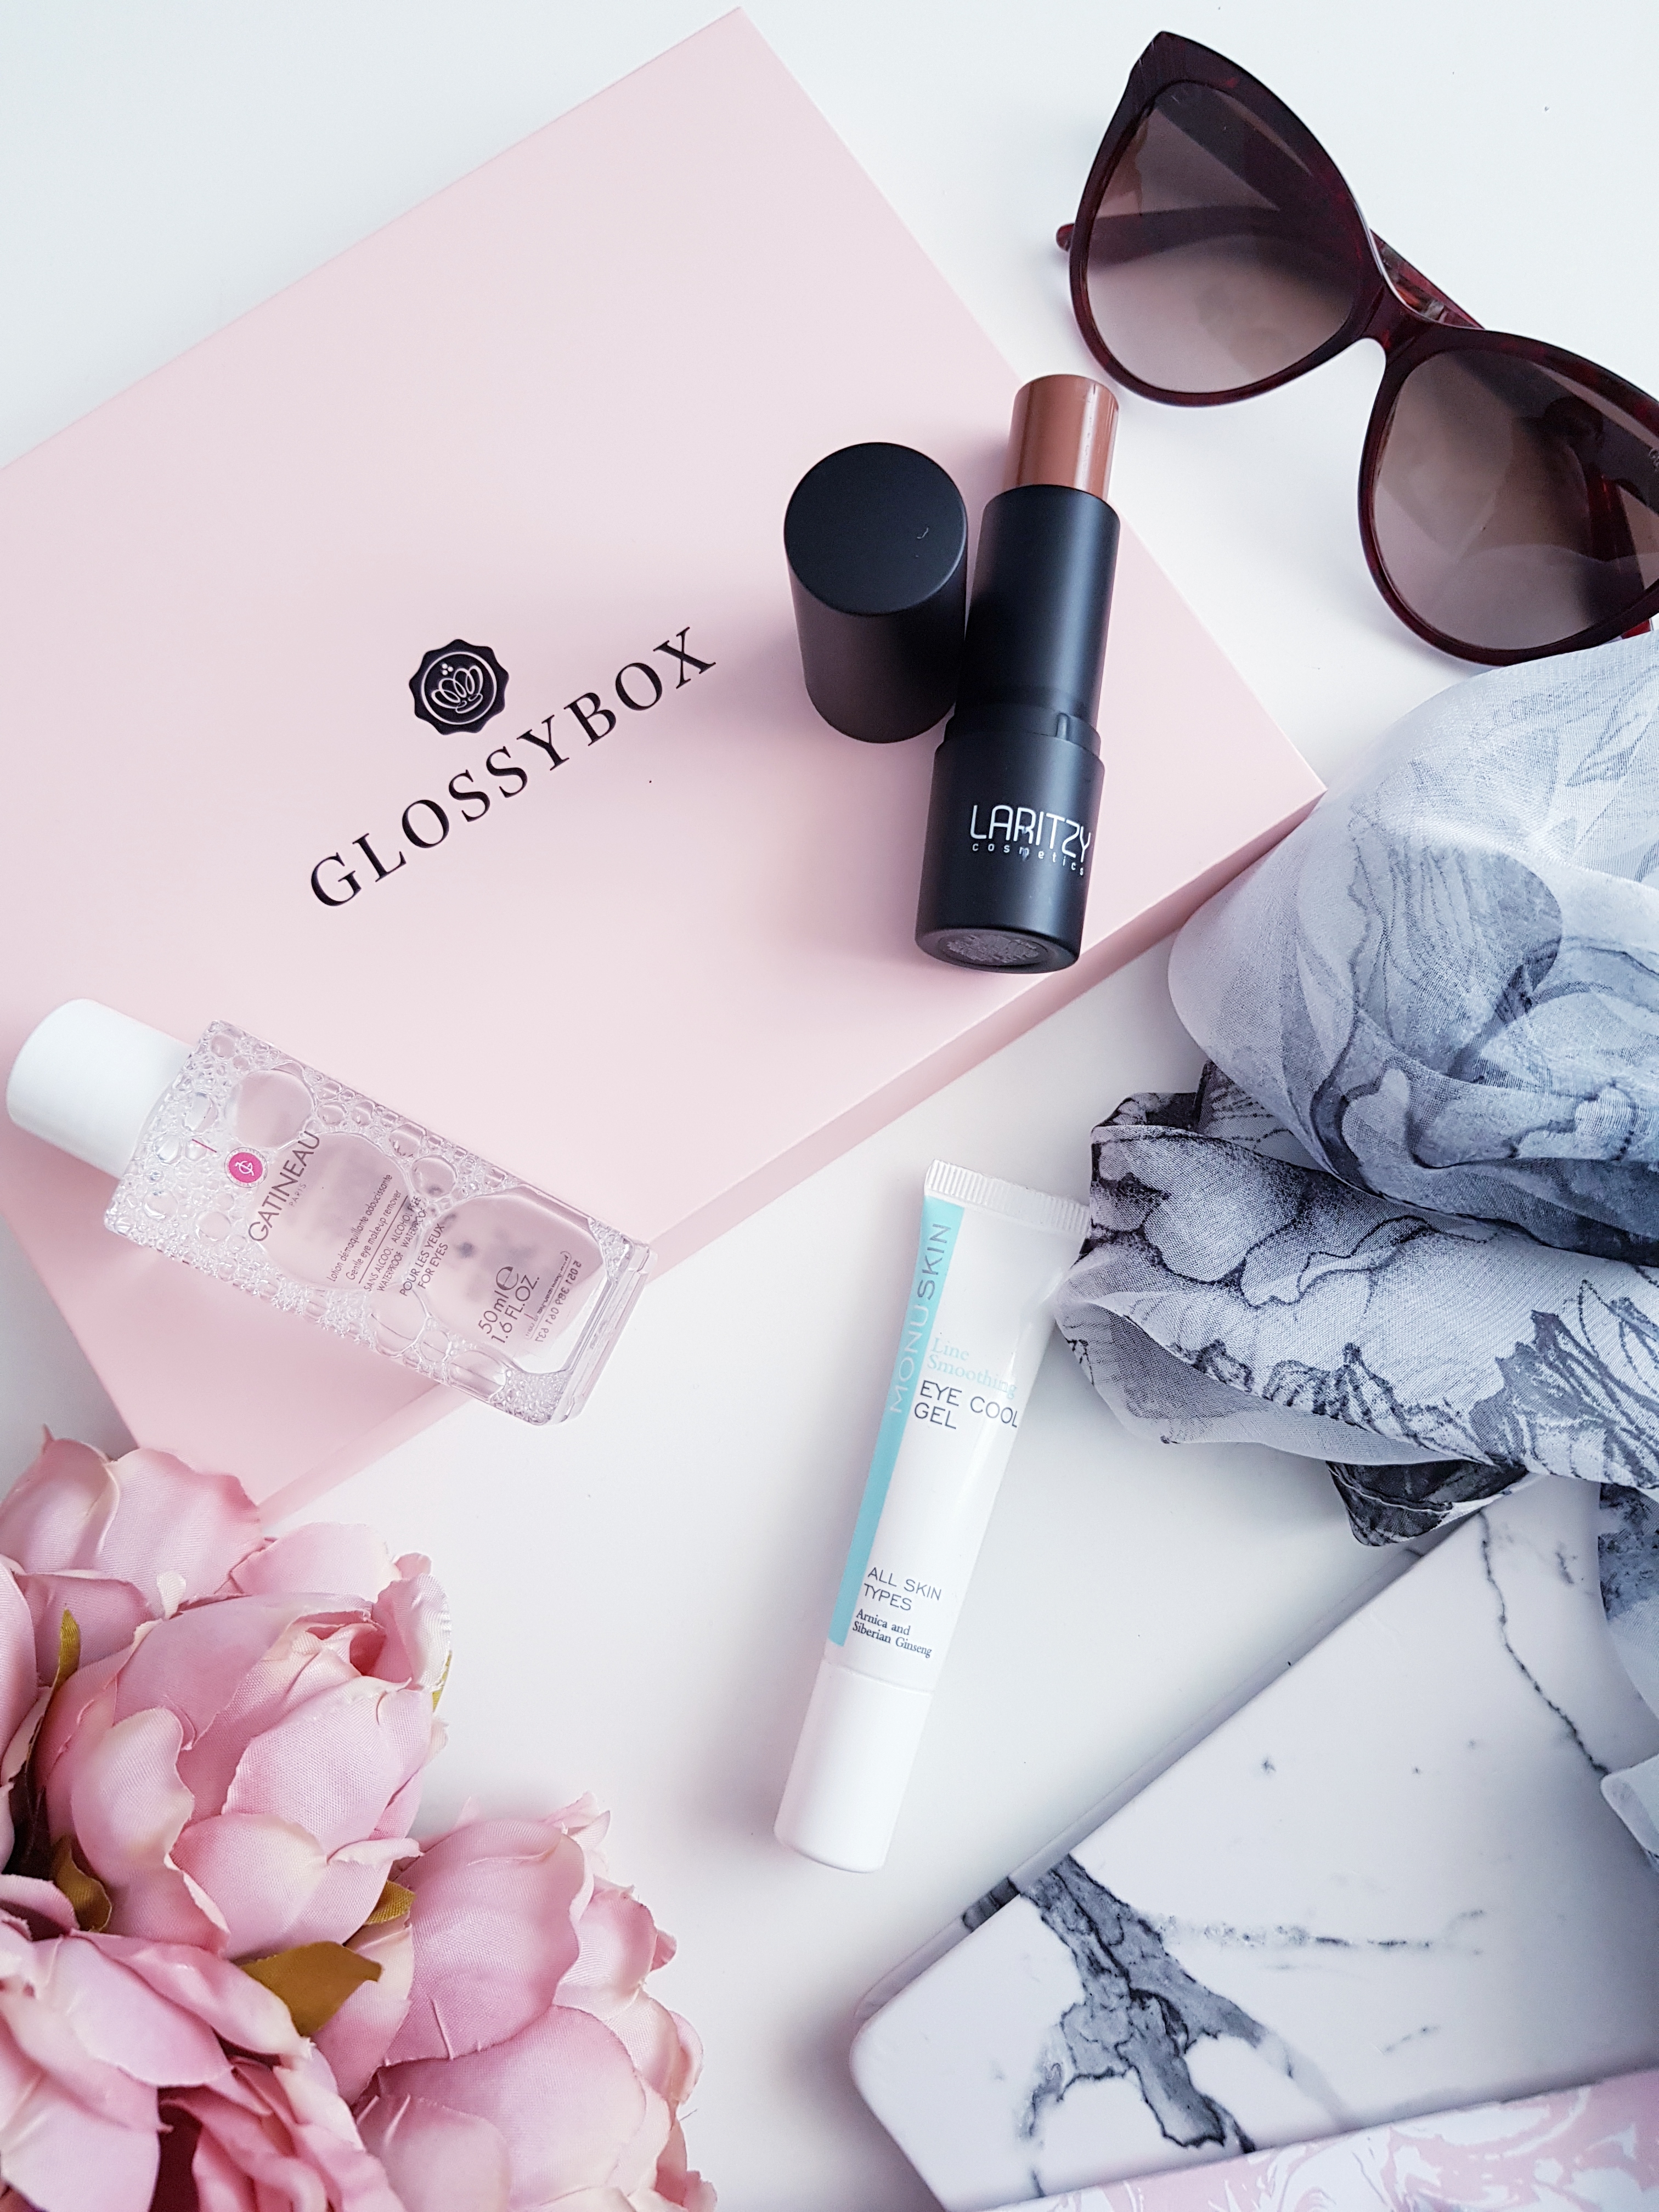 Glossybox French Beauty Essentials - Laritzy bronzing stick, Gatineau makeup remover, Monu skincare eye cool gel - Ms TAntrum Blog